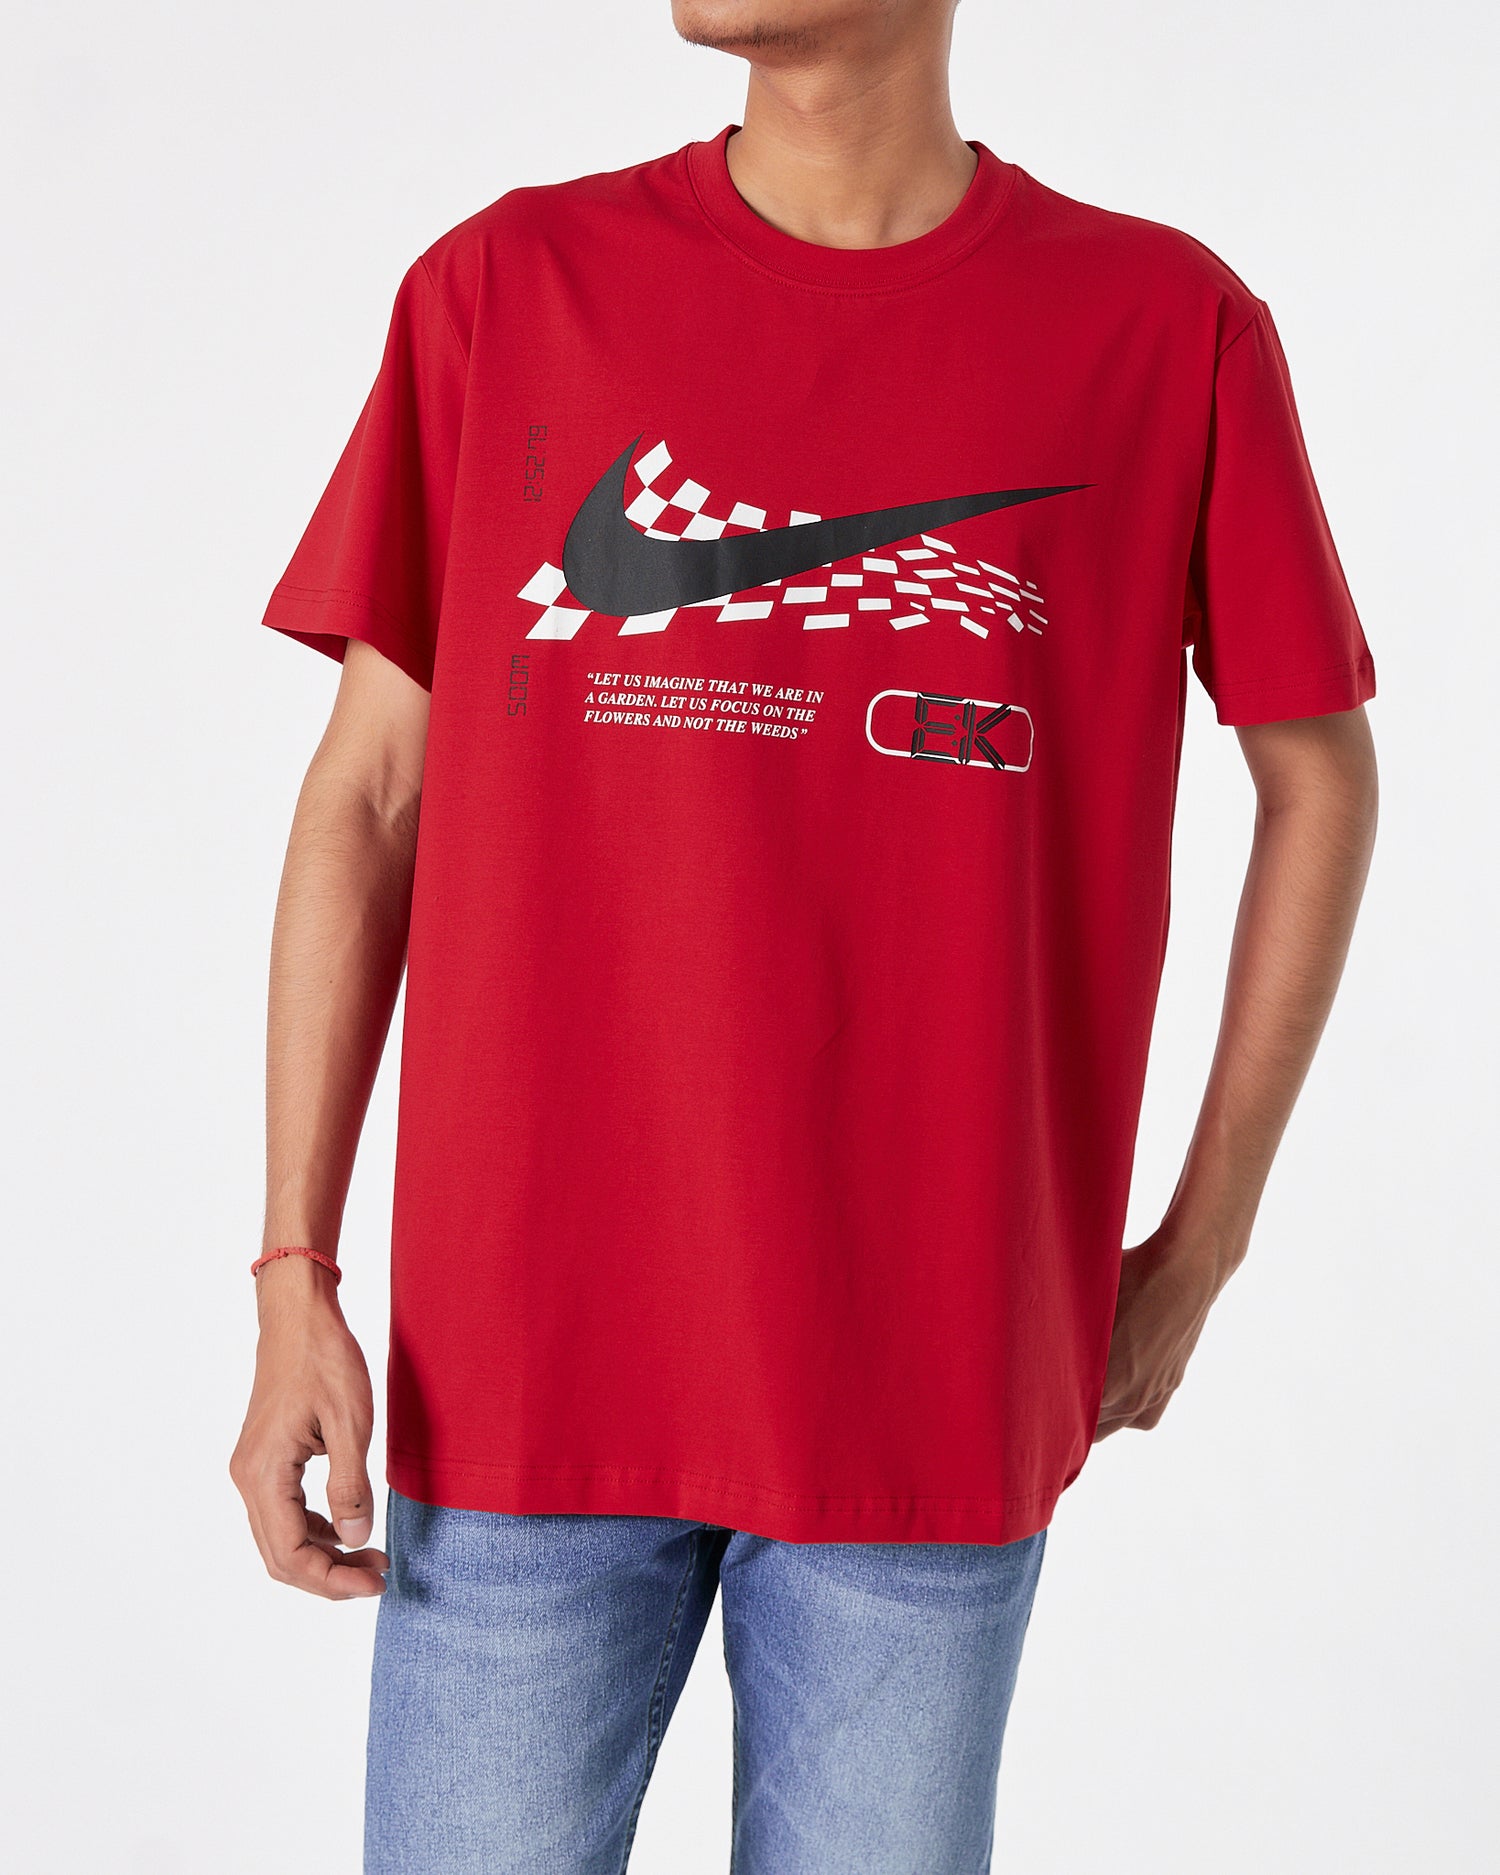 NIK Swooh Logo Printed Men Red T-Shirt 16.90